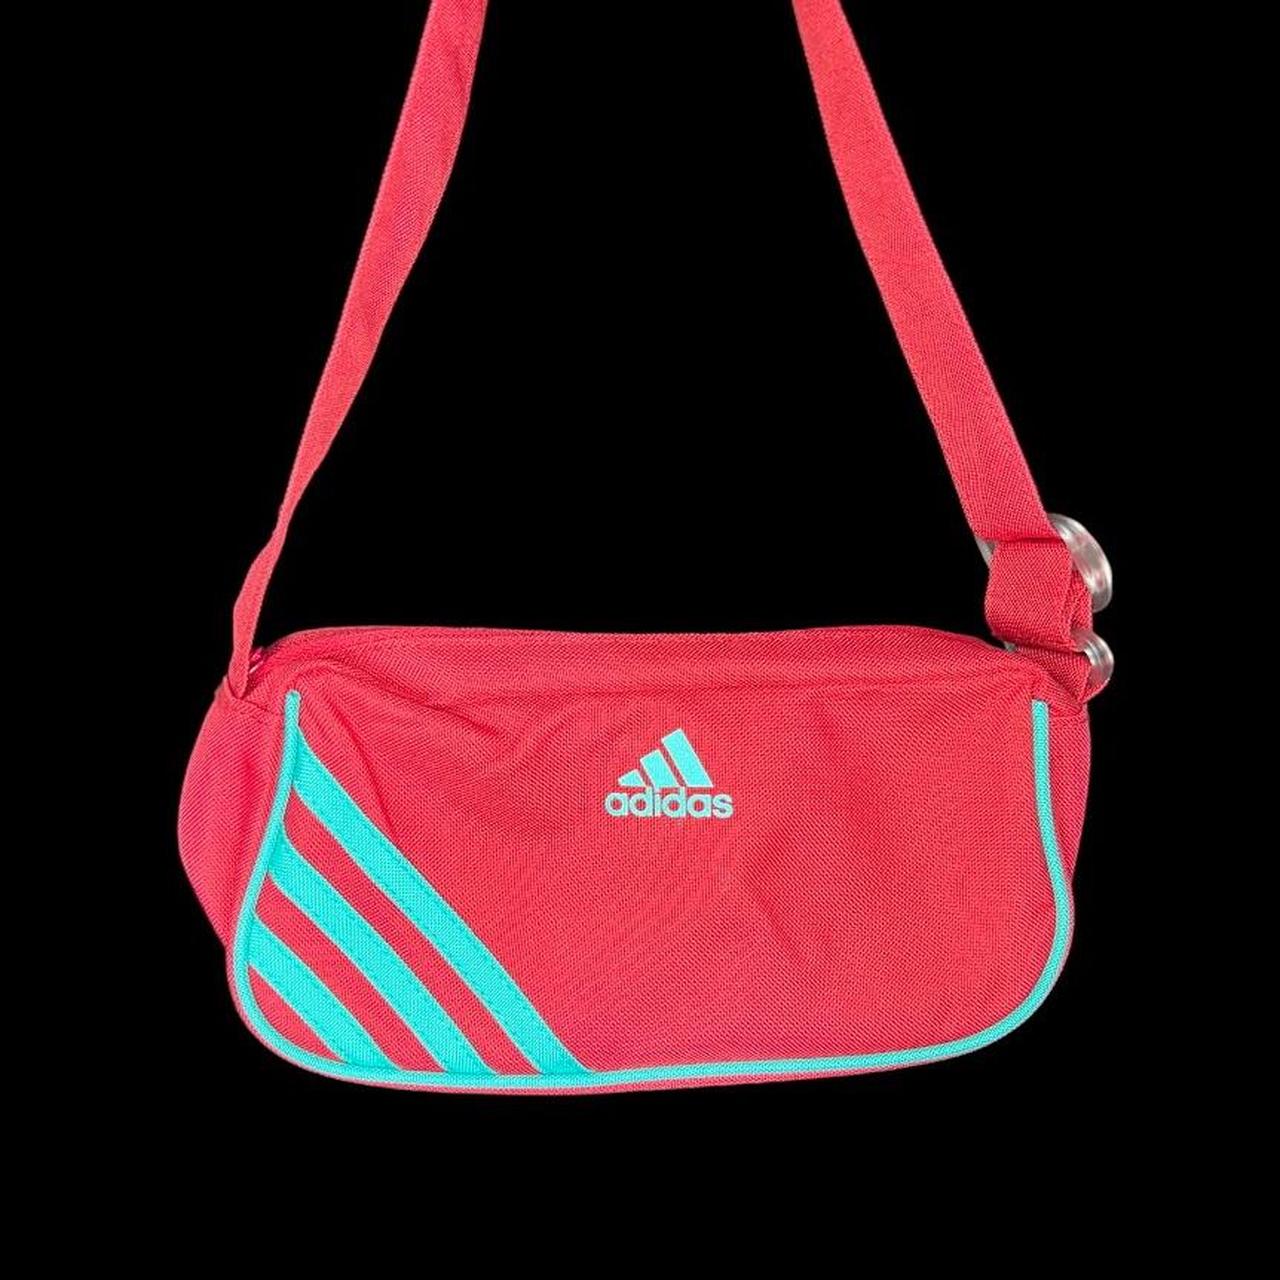 Adidas Women's Red Bag